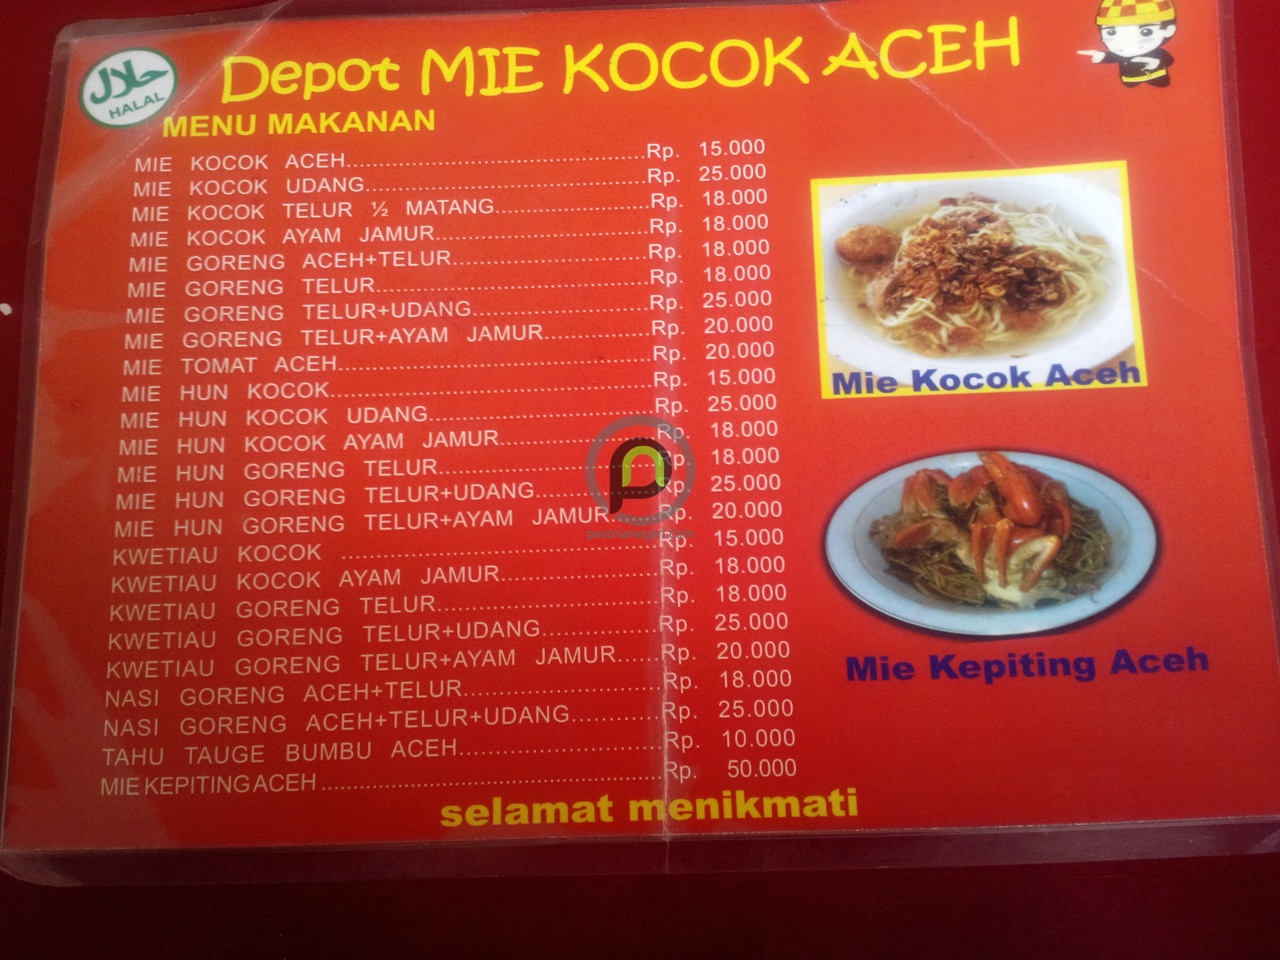 ‘surabaya_depot_mie_kocok_aceh_menu